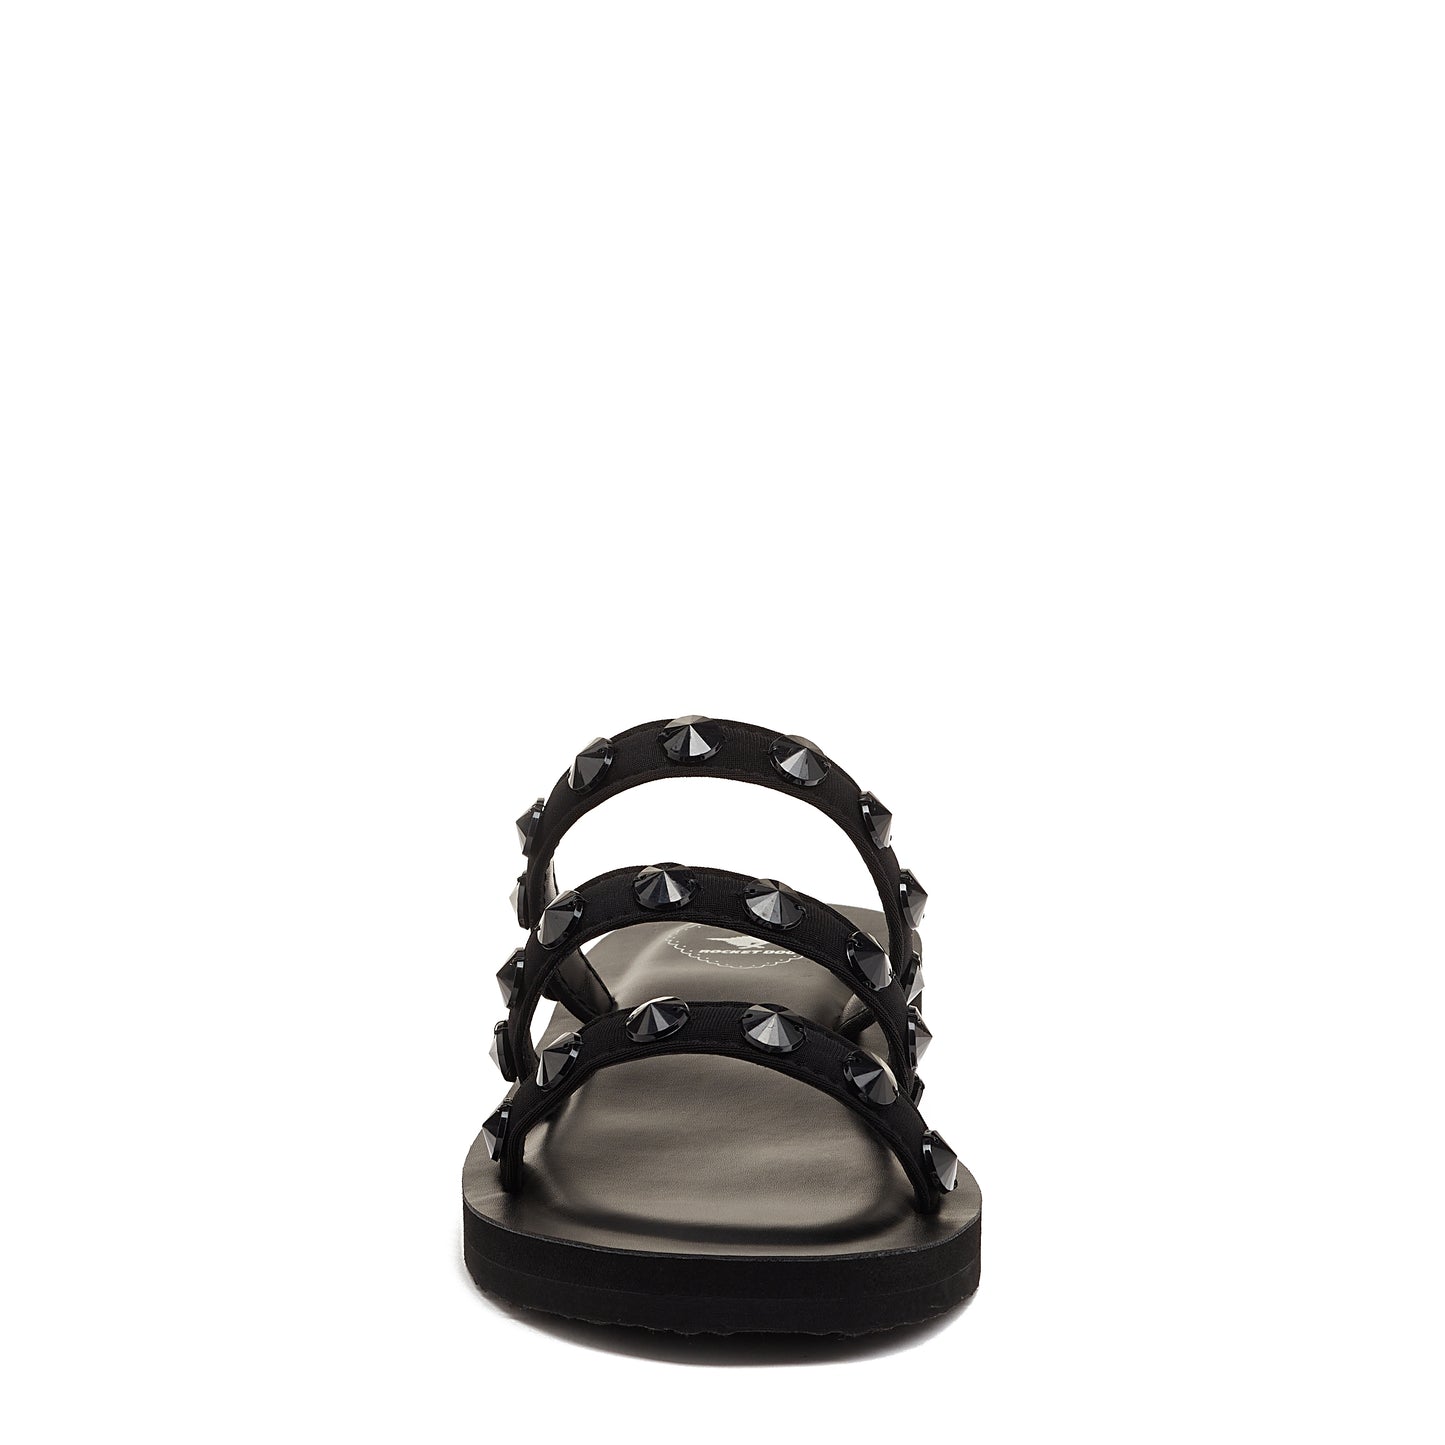 Noelle Black Jeweled Sandals